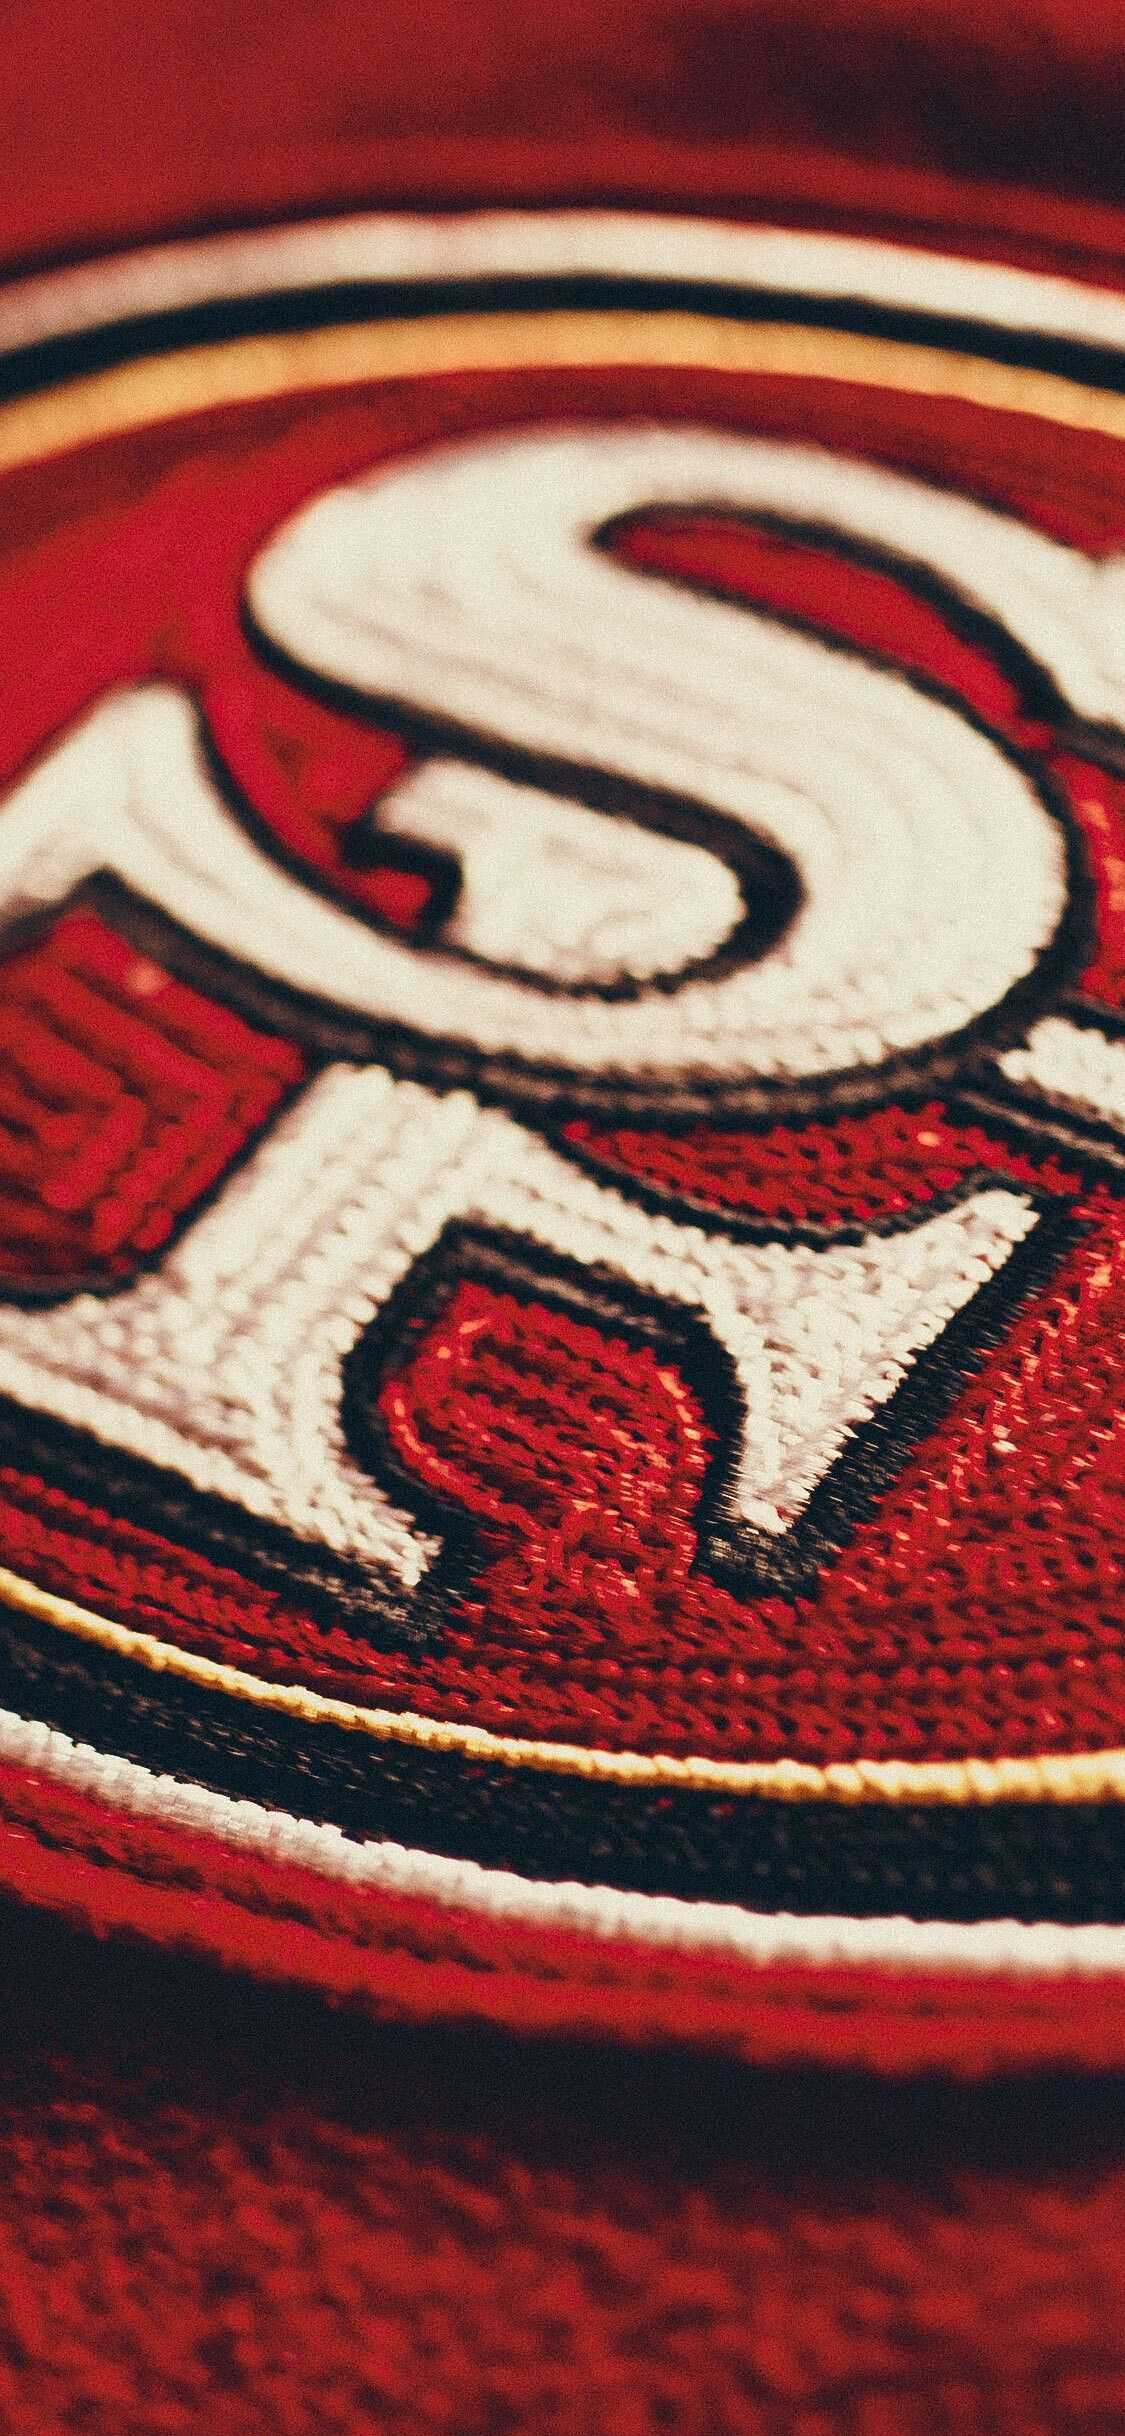 49ers Wallpaper 1